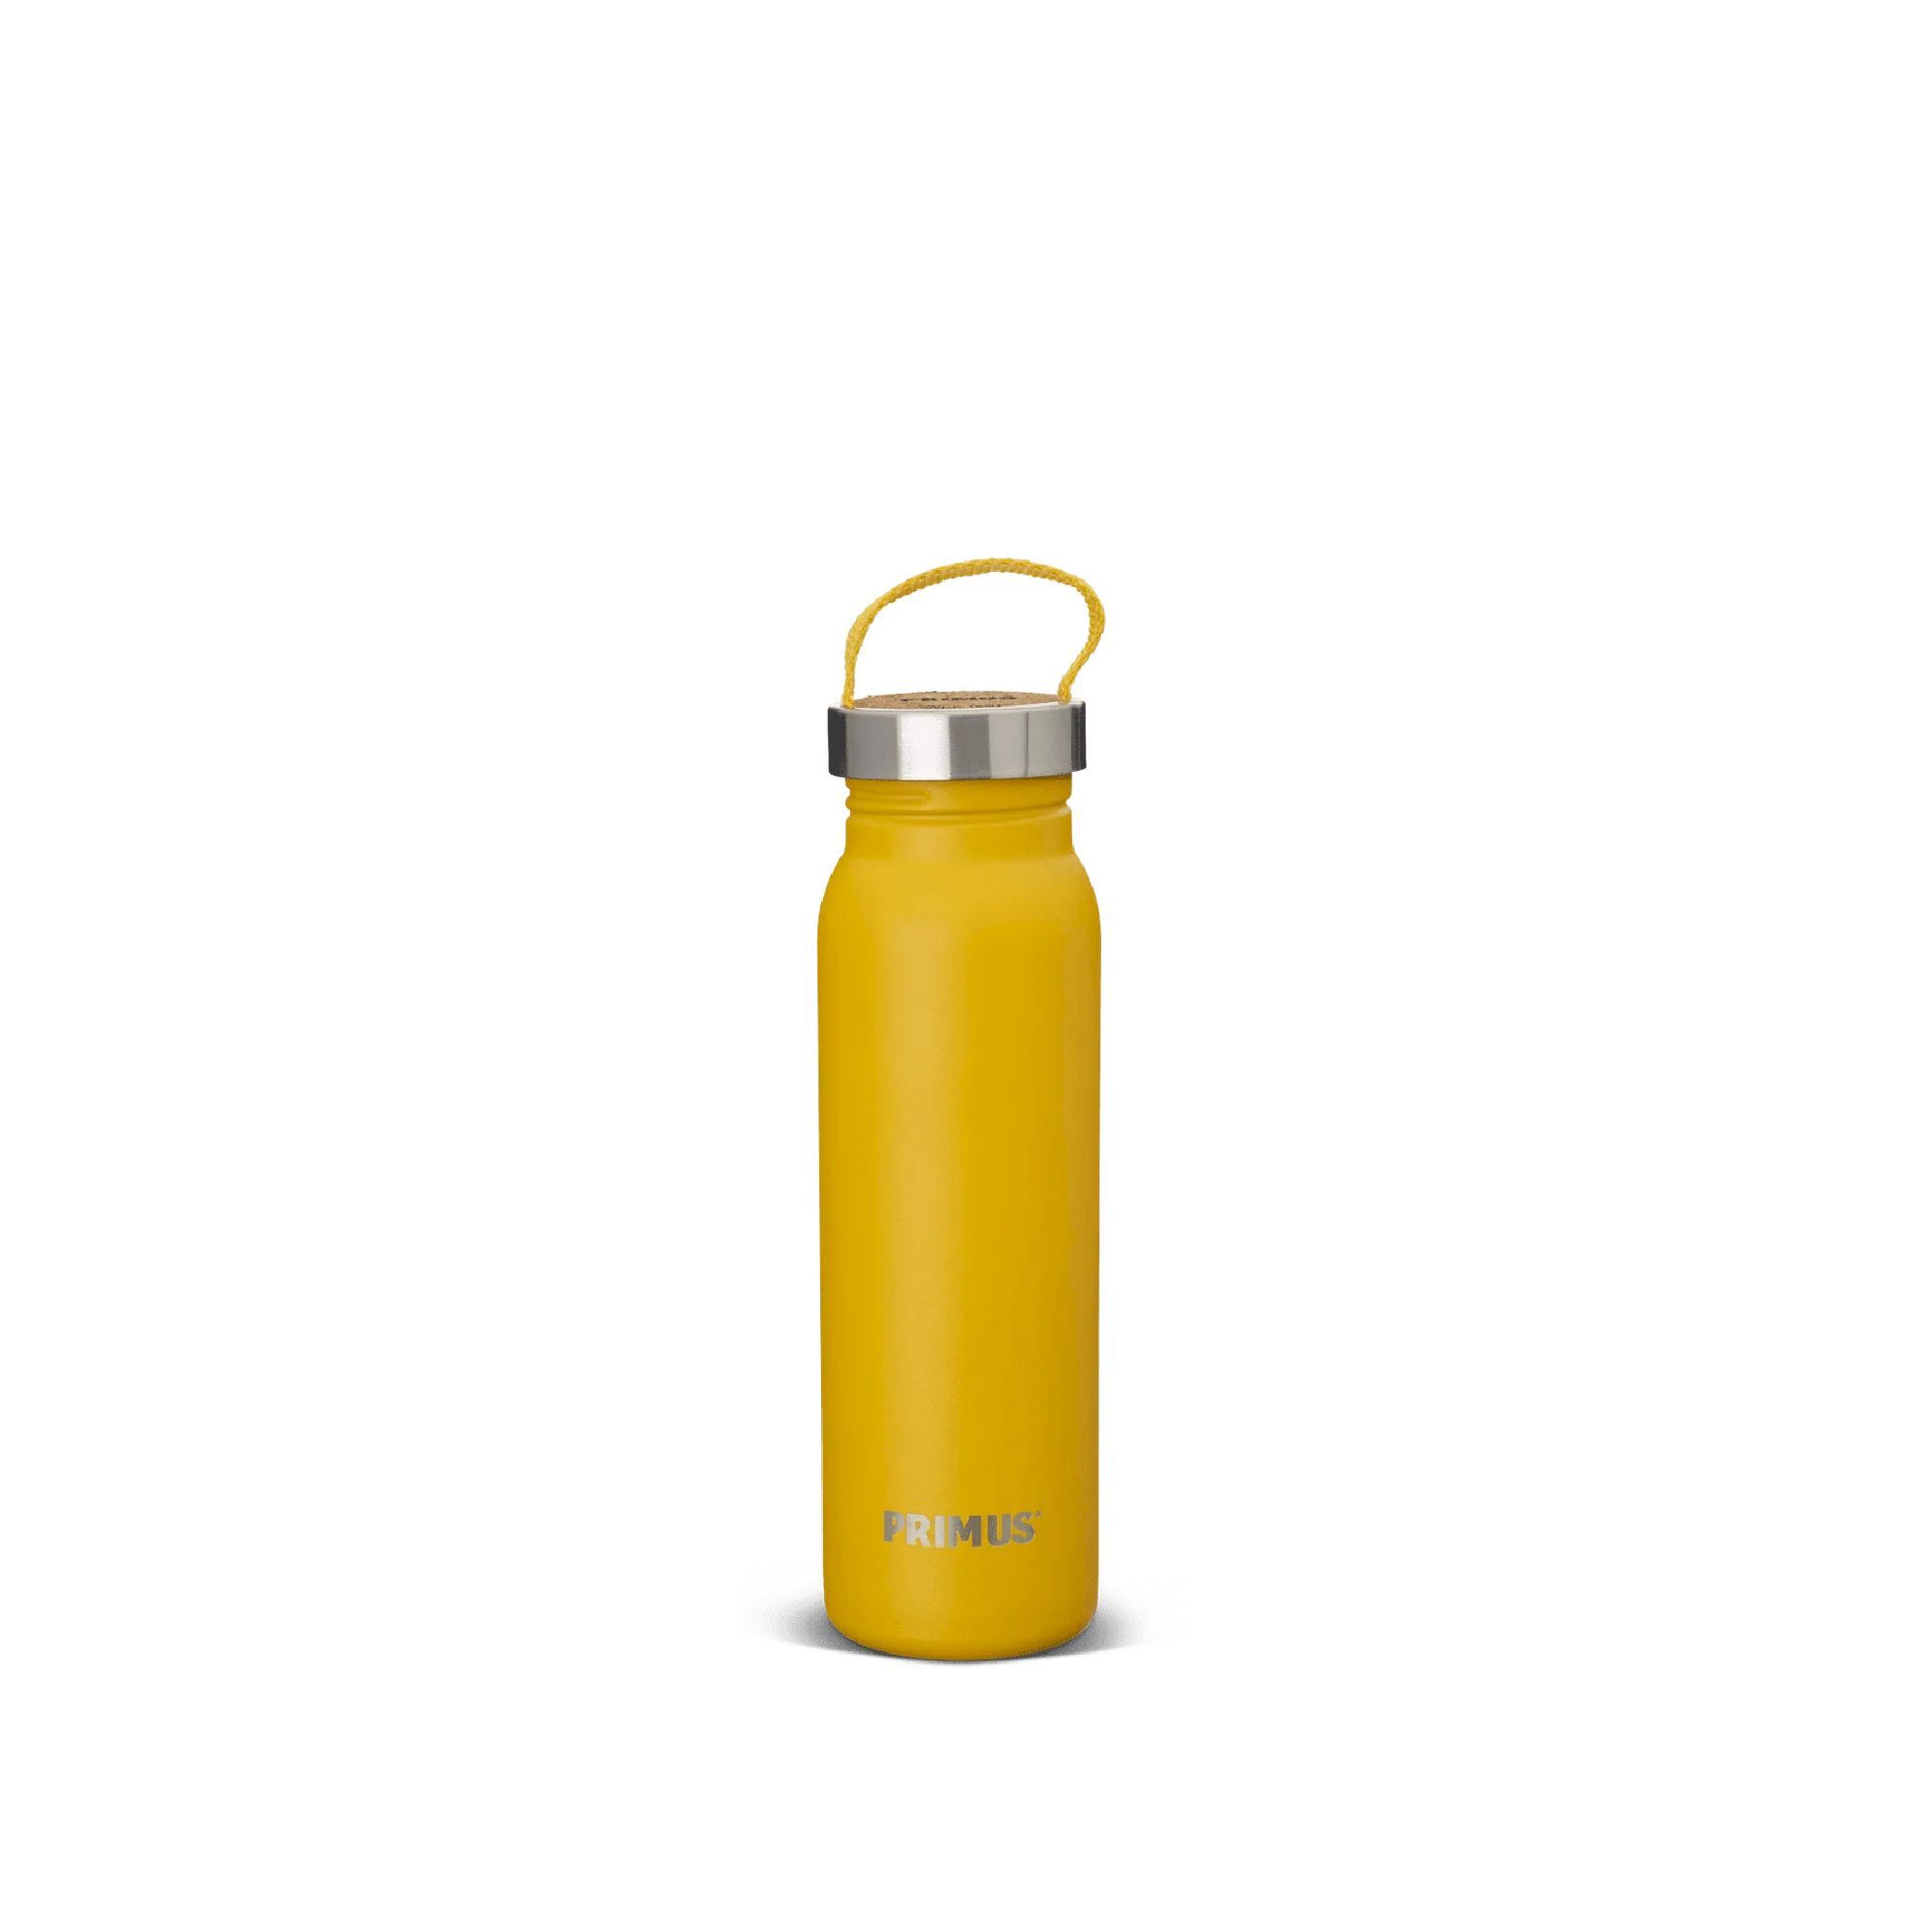 Primus Klunken Bottle - Drickflaska | Hardloop